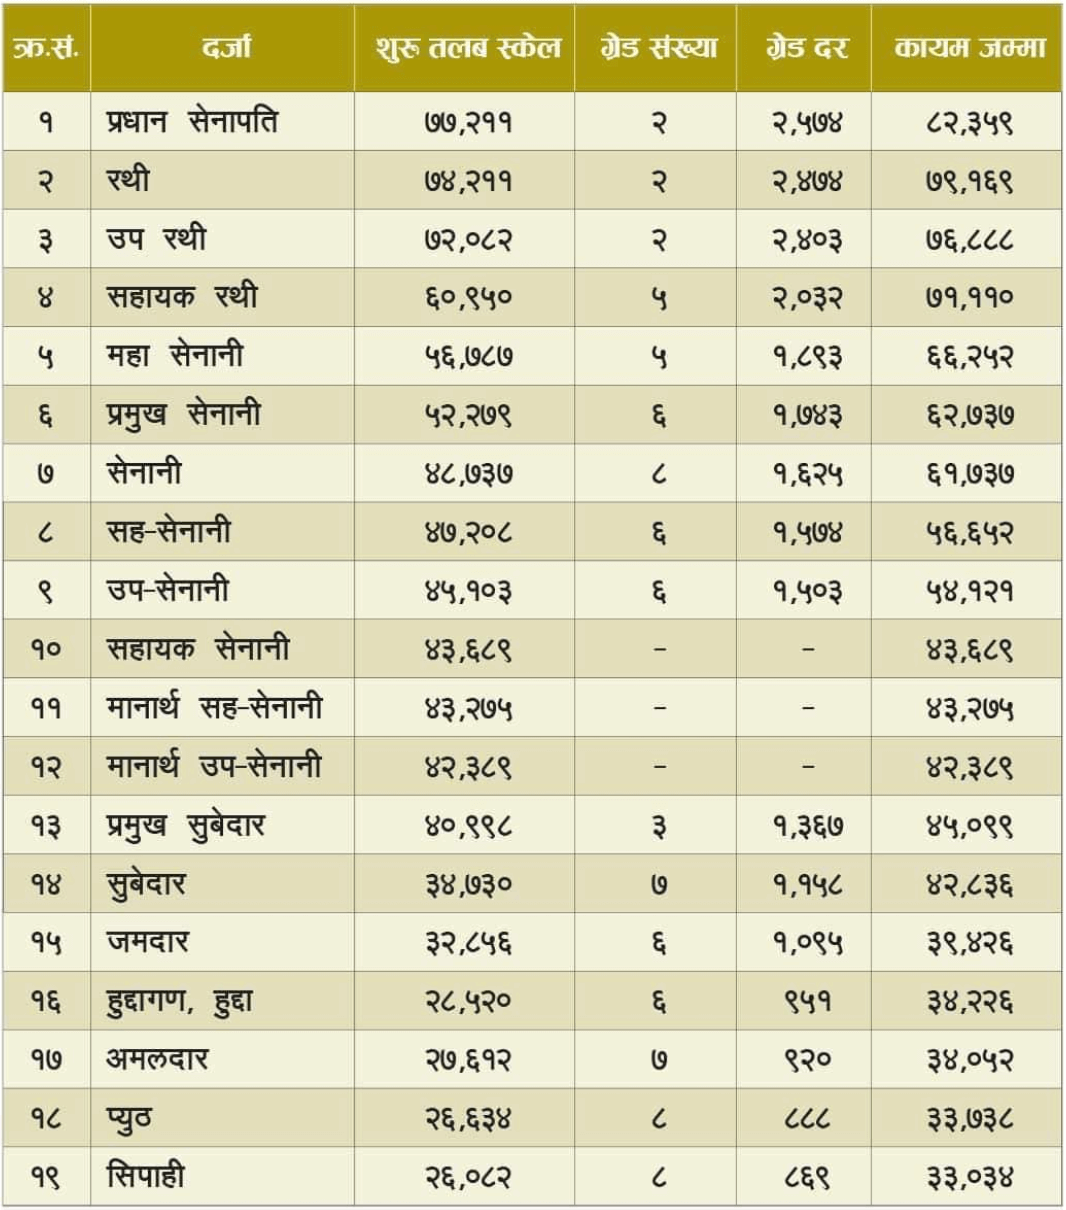 Nepal Army Salary Scale